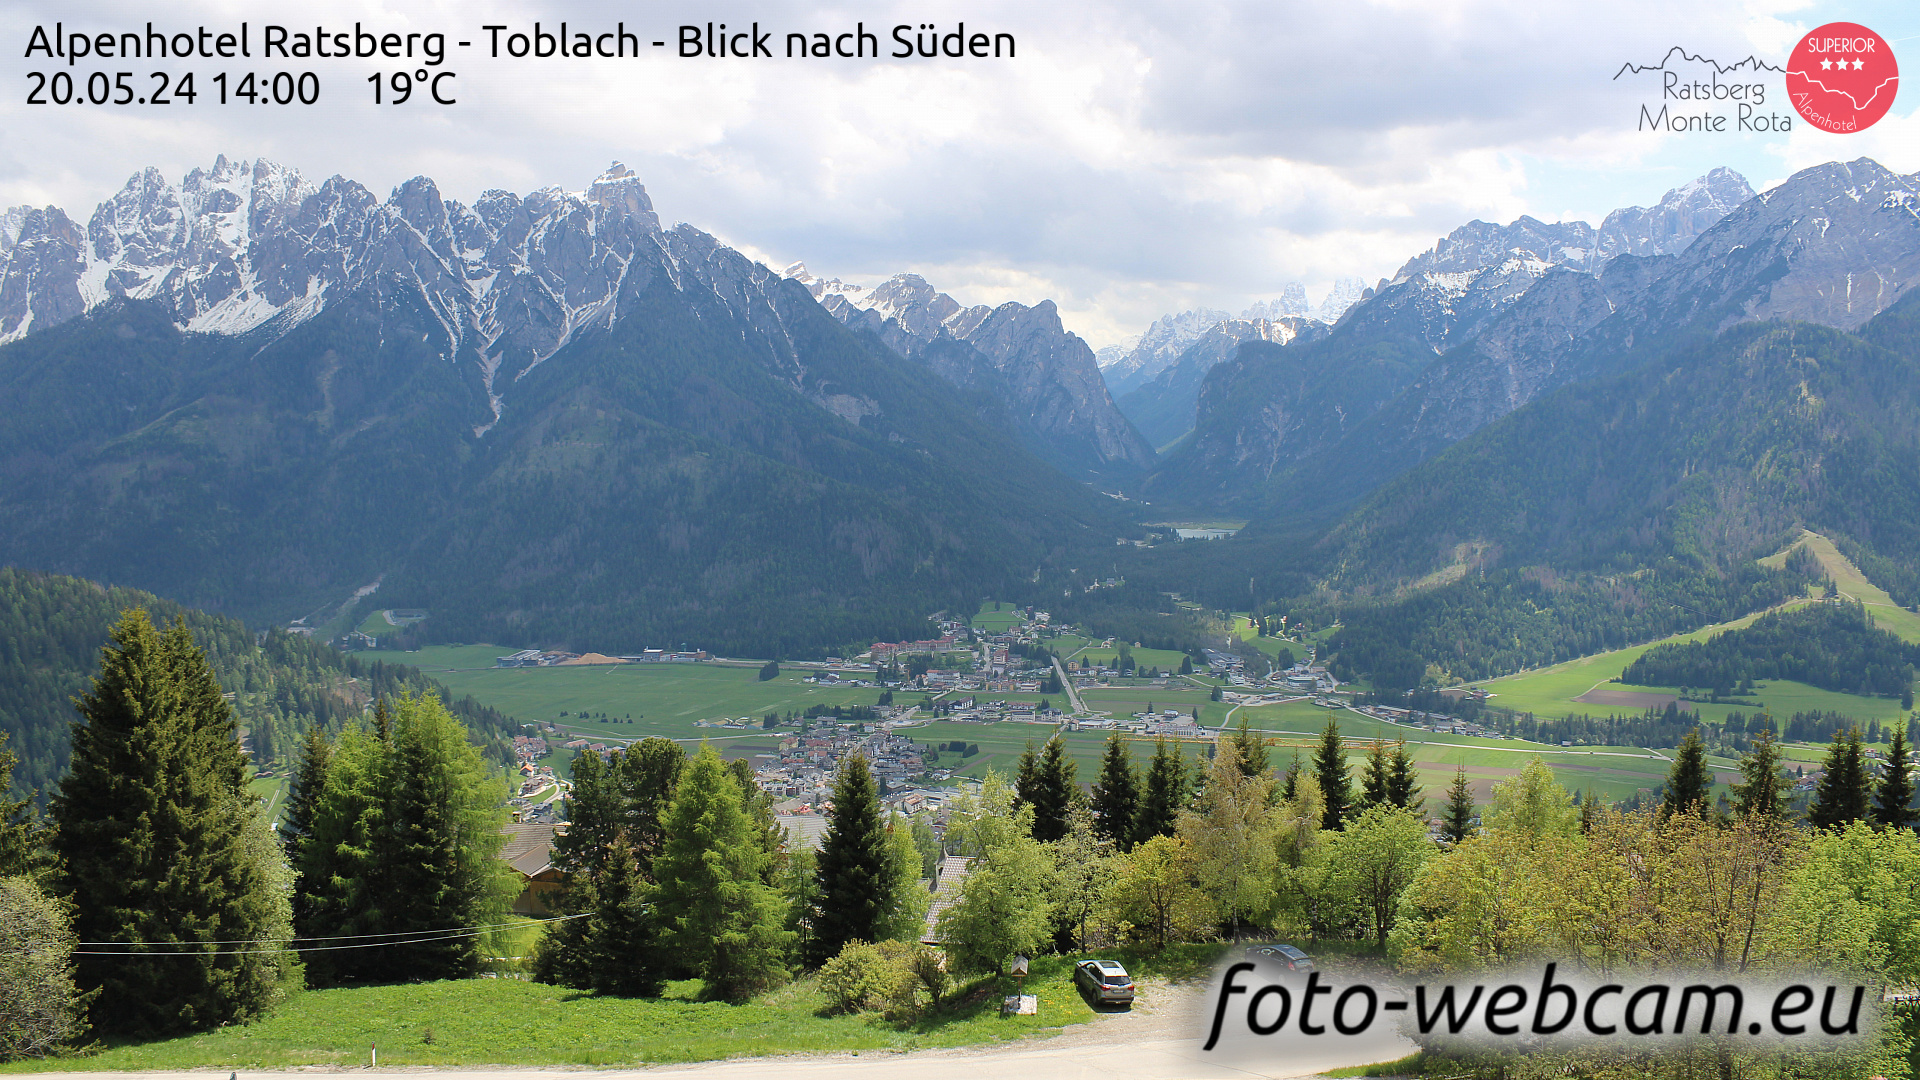 Toblach (Dolomitas) Dom. 14:03